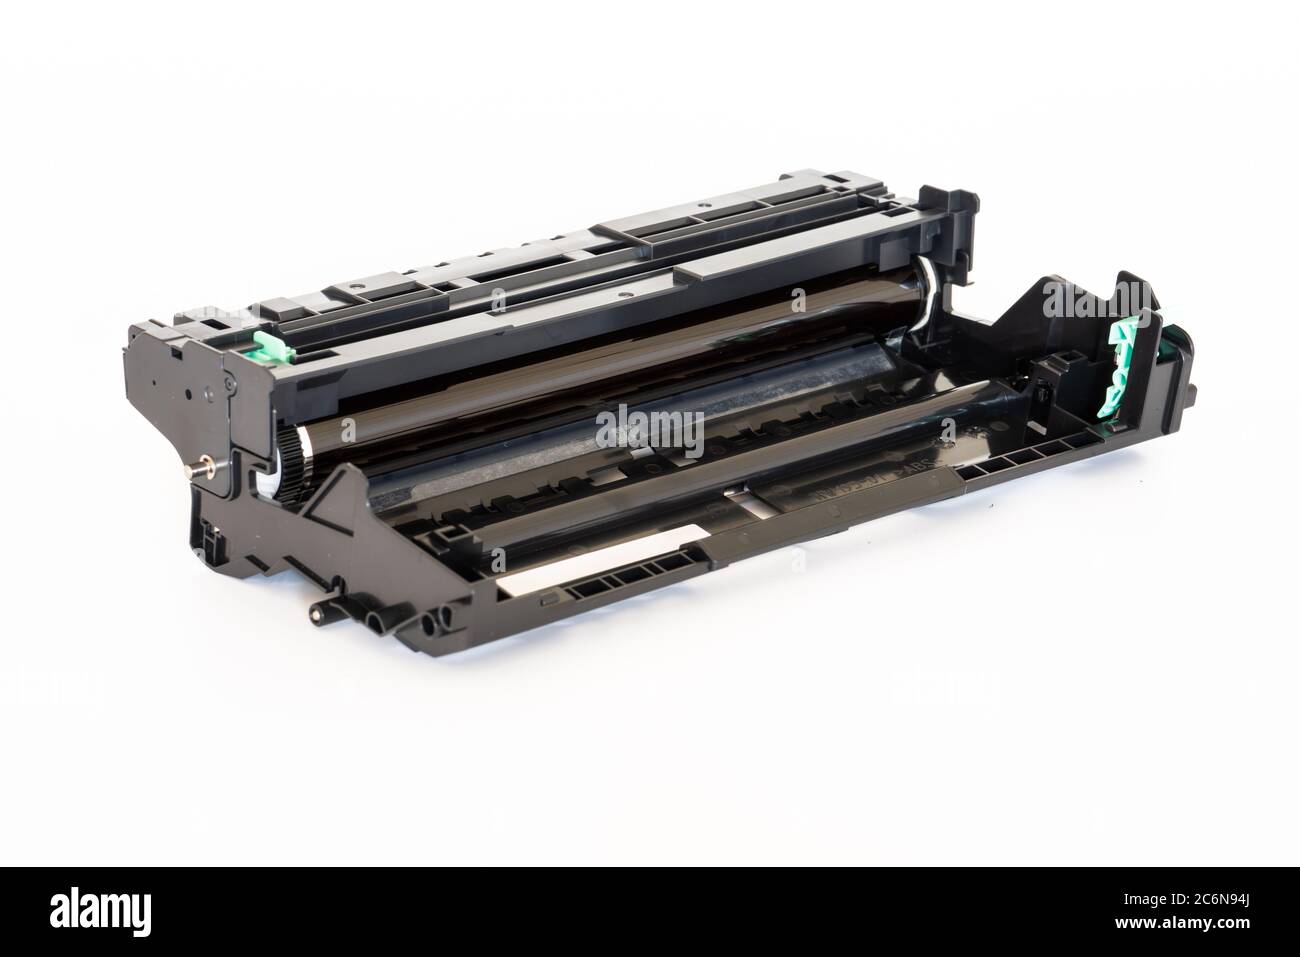 Laser printer drum and toner cartridge Stock Photo - Alamy